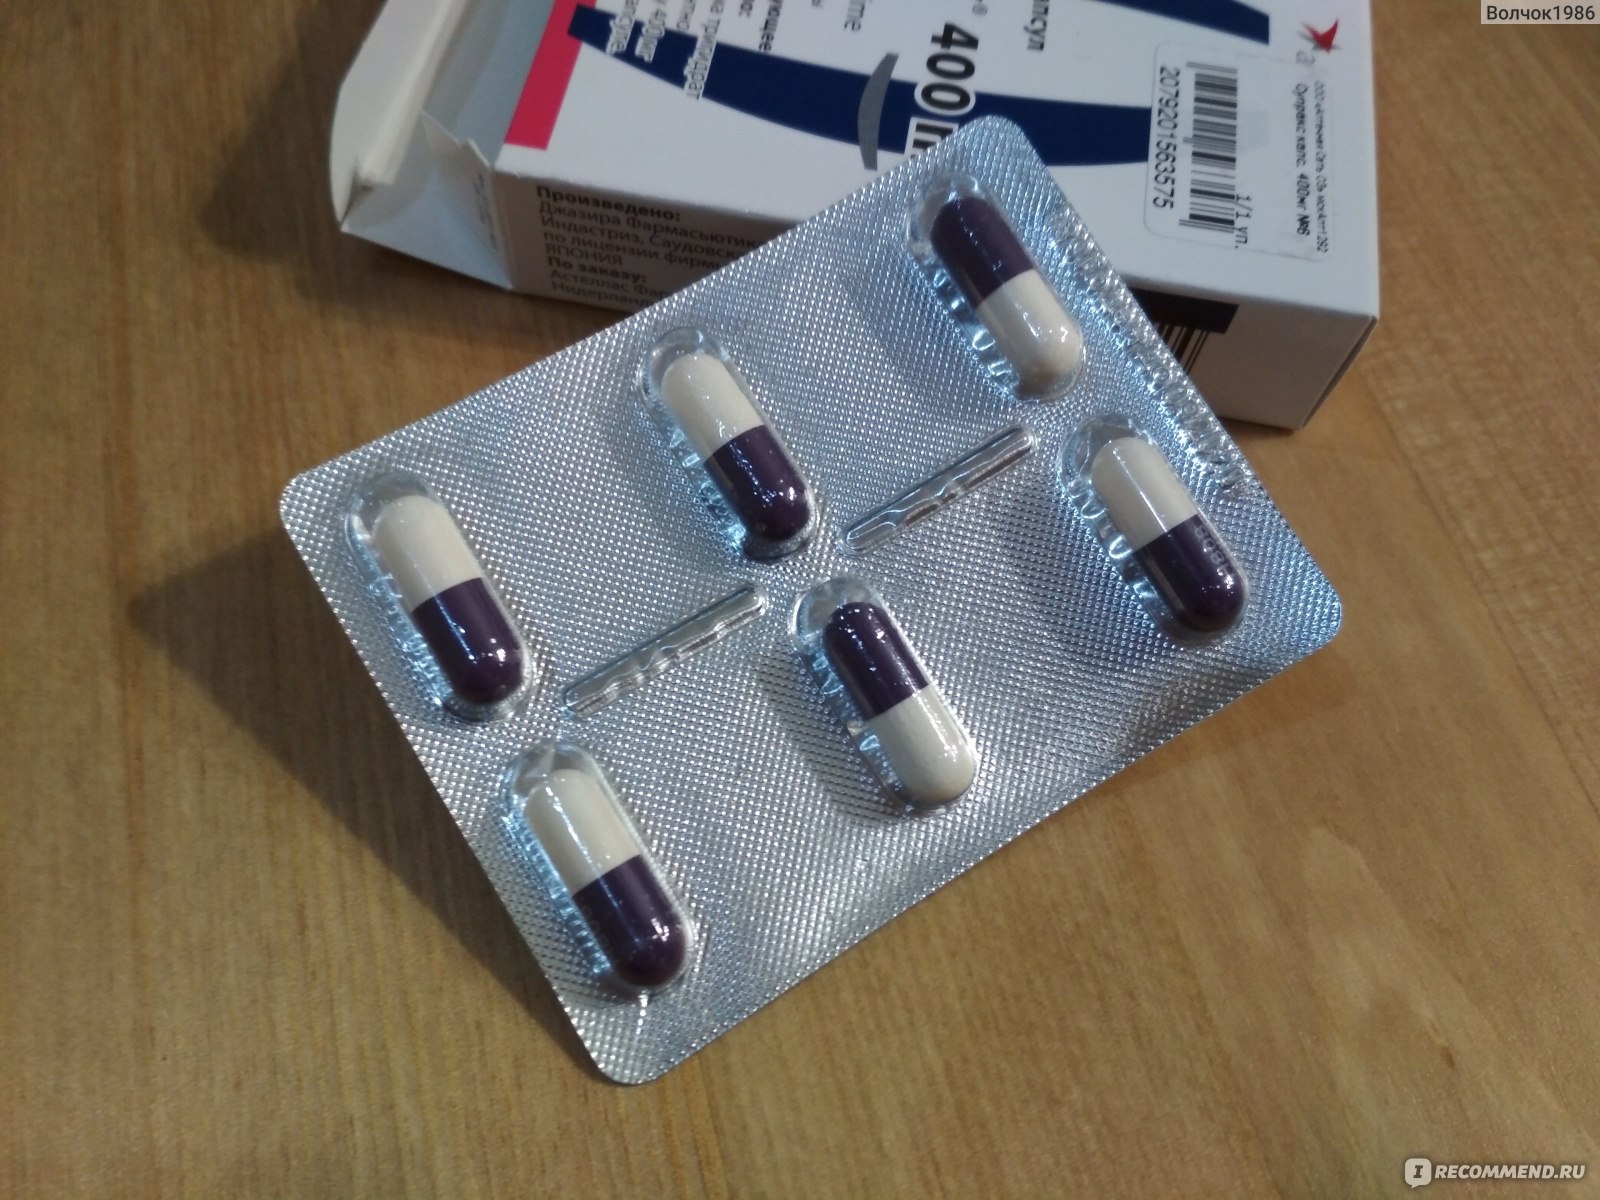 Супракс группа антибиотиков. Антибиотик Супракс. Супракс 6 капсул. Супракс антибиотик таблетки.